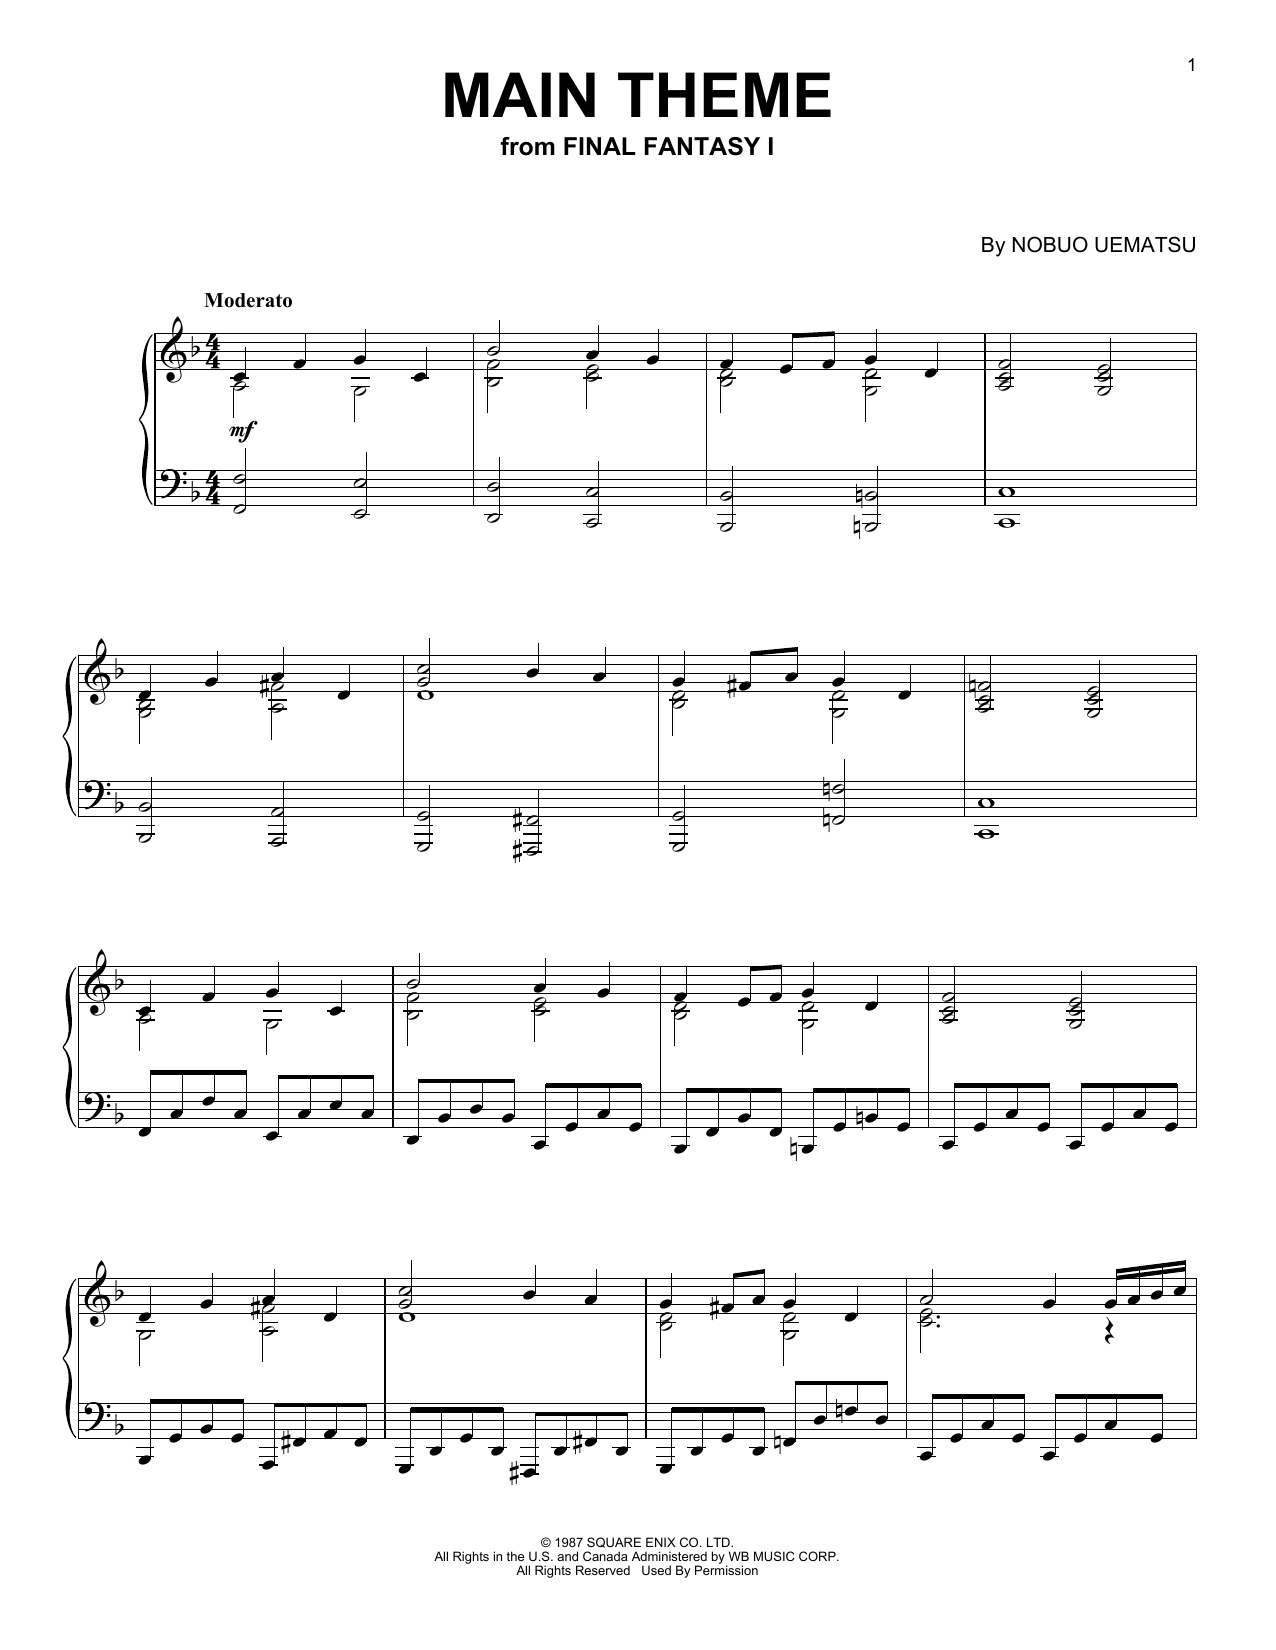 Nobuo Uematsu Main Theme (from Final Fantasy) Sheet Music Notes & Chords for Piano - Download or Print PDF